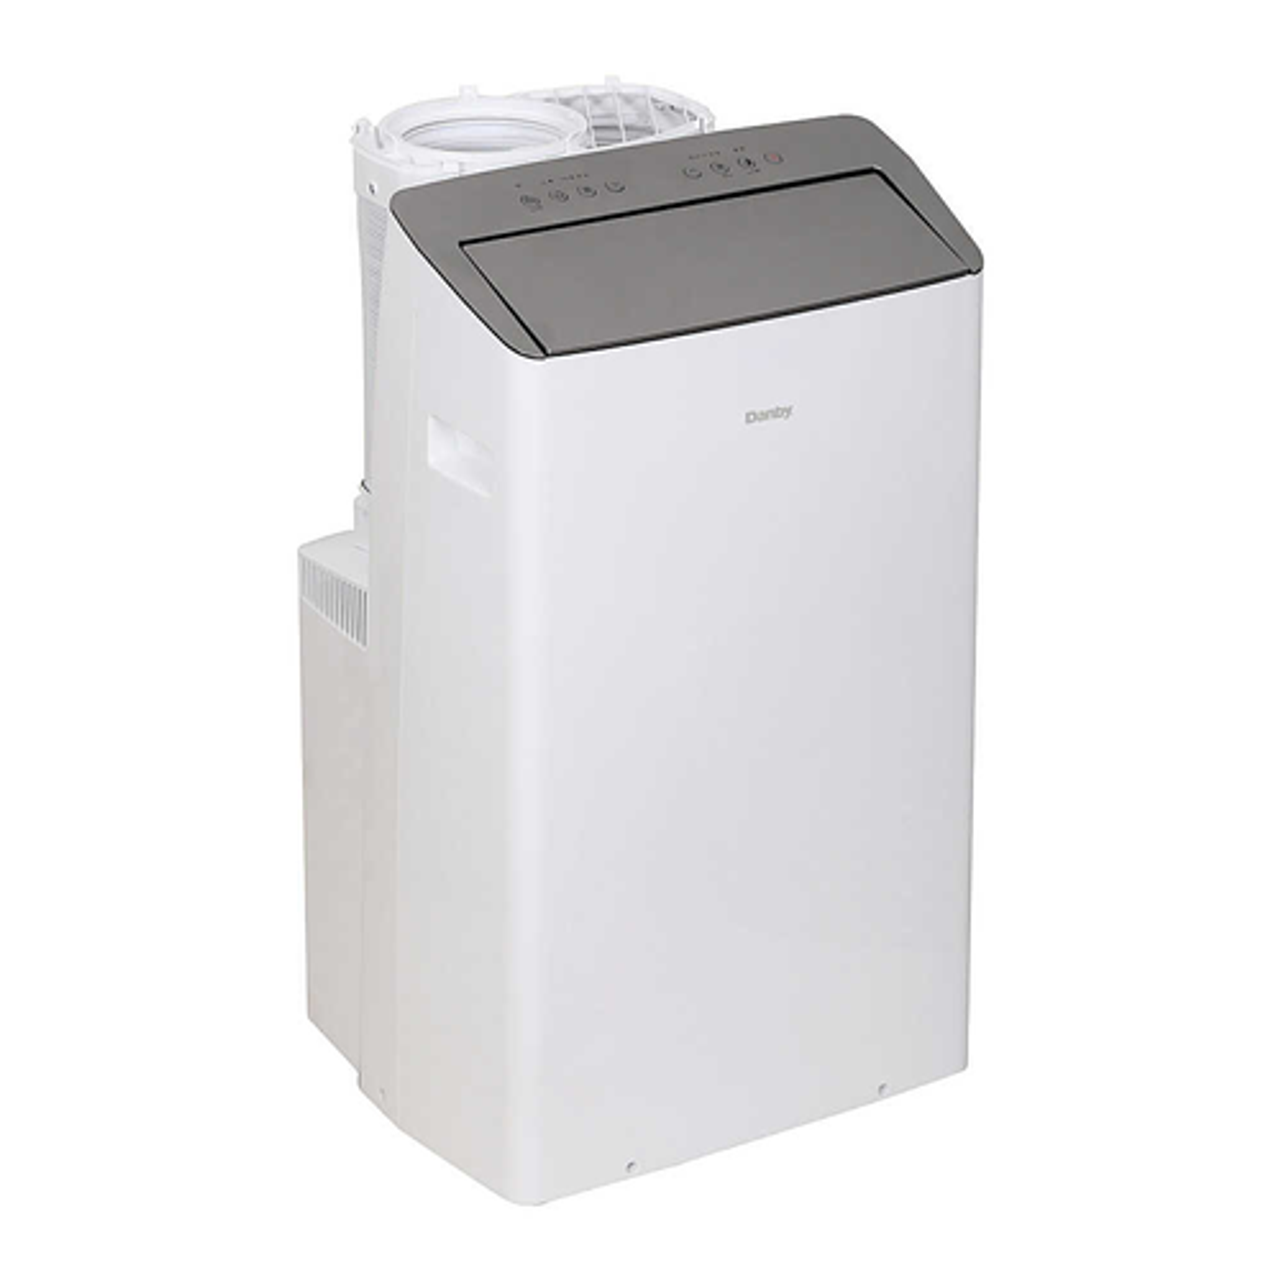 Danby - 14,000 BTU Inverter Portable Air Conditioner - White